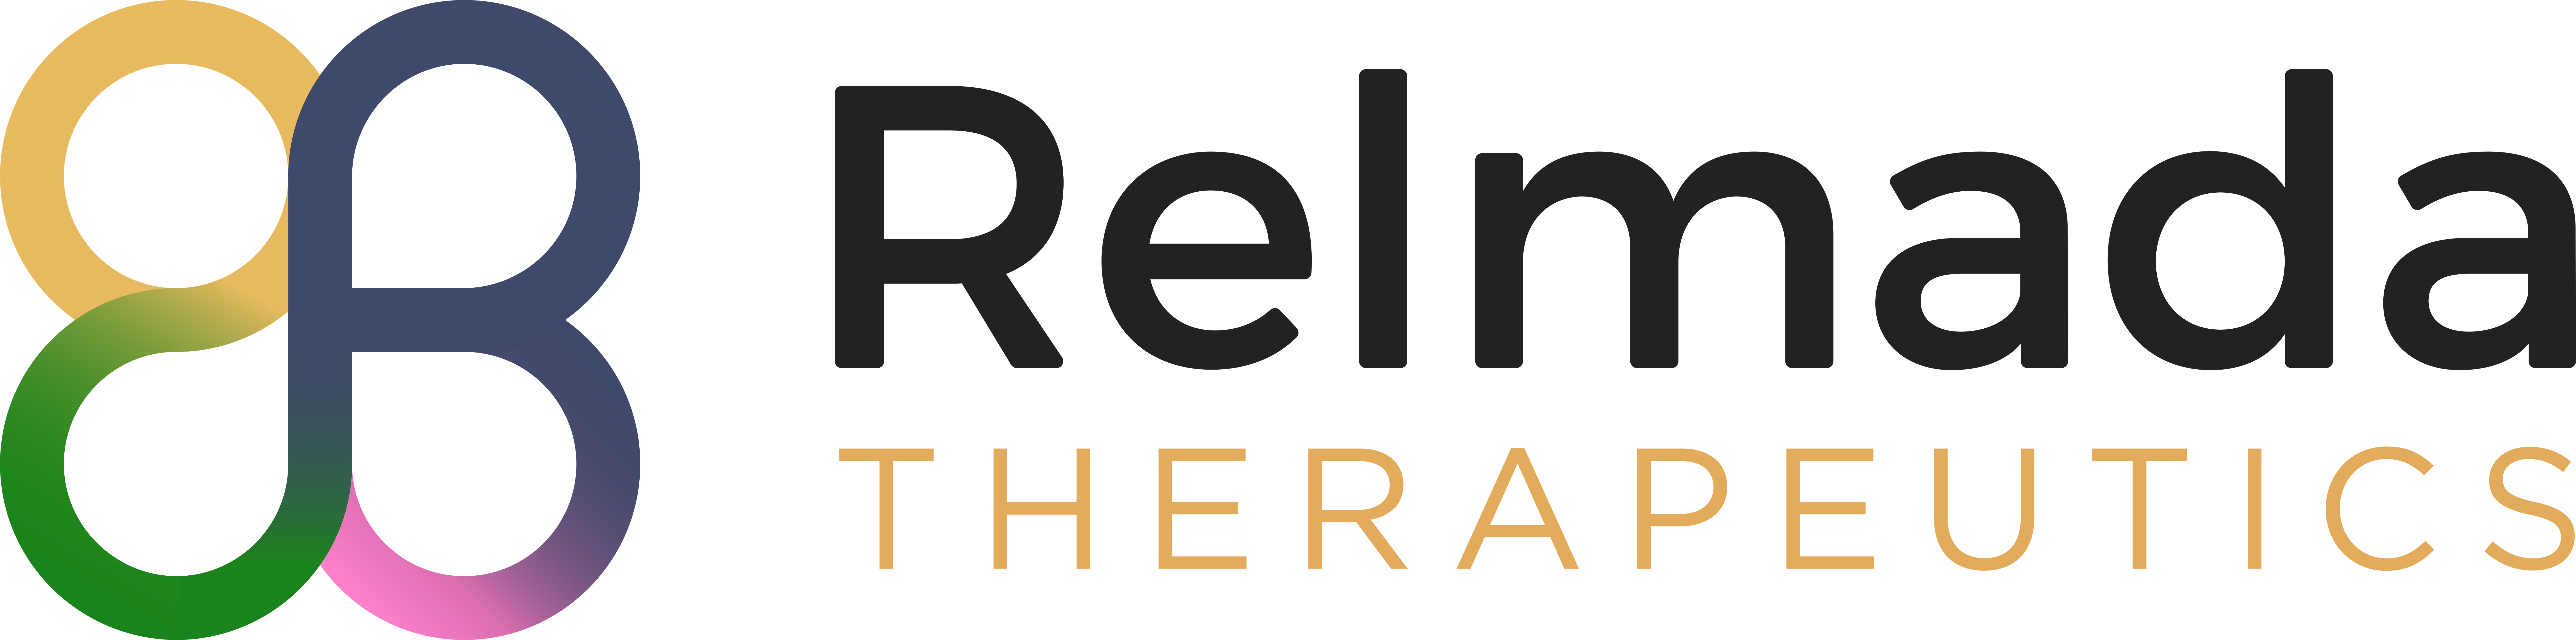 Relmada Therapeutics - ADAA conference sponsor